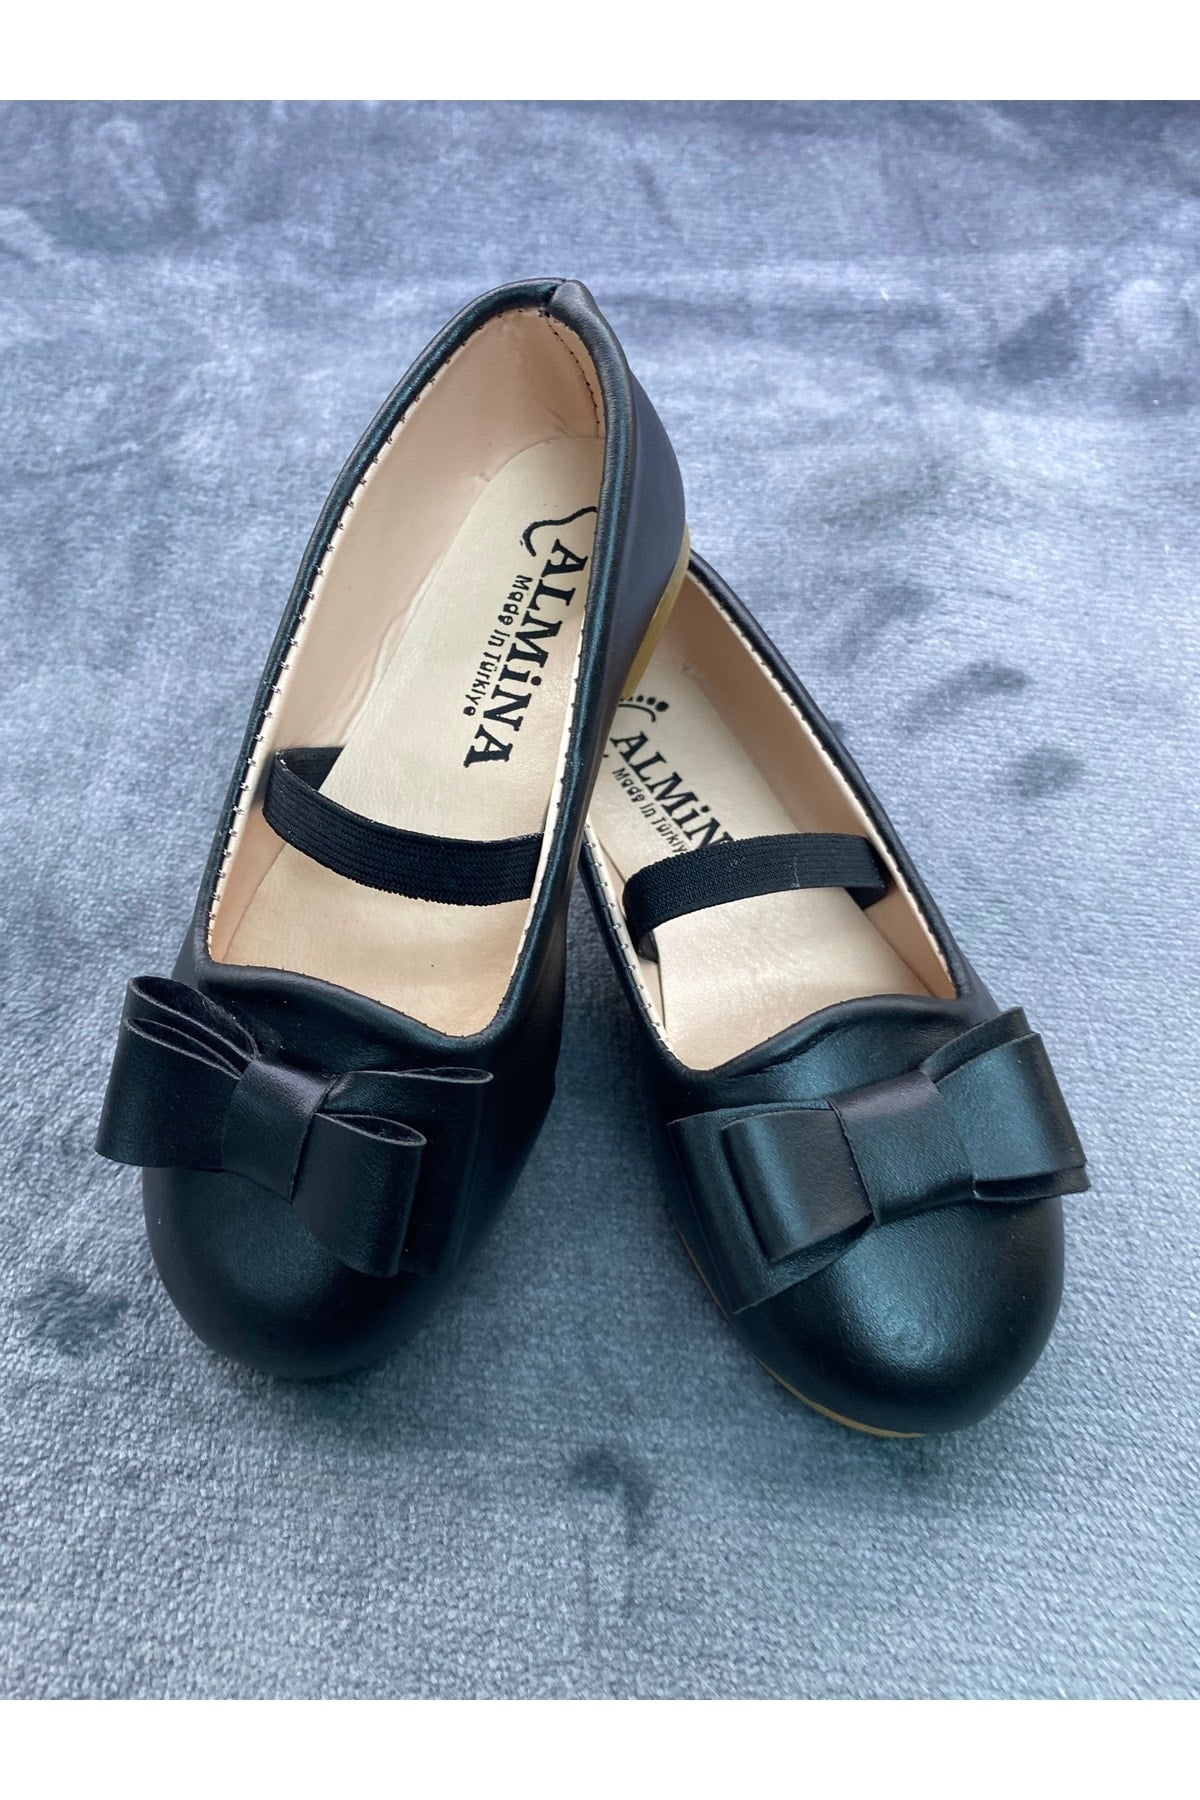 Shoes Girls Kids Bowtie Detailed Black Flats